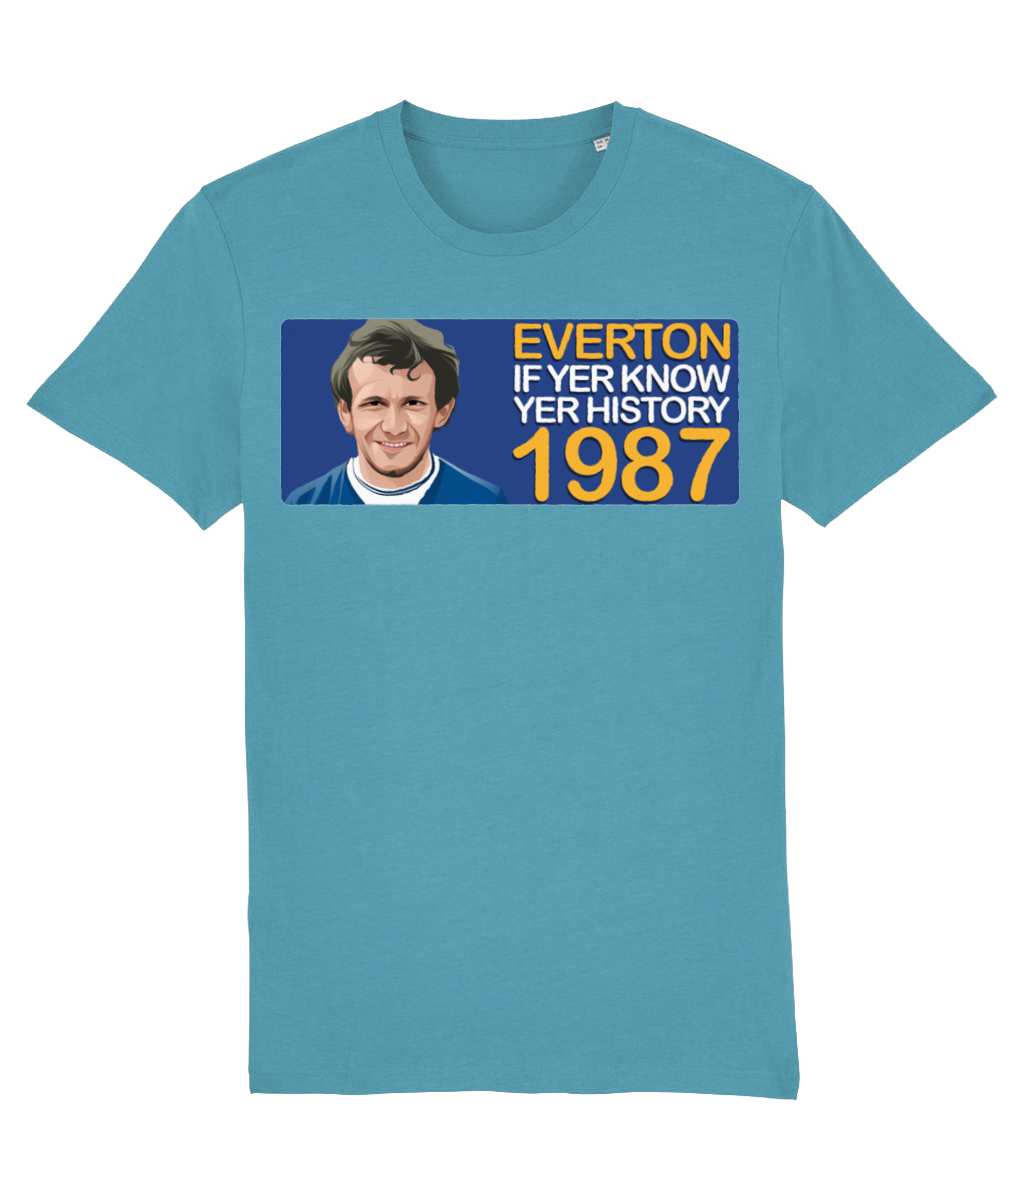 Everton 1987 Peter Reid If Yer Know Yer History Unisex T-Shirt Stanley/Stella Retrotext Atlantic Blue XX-Small 